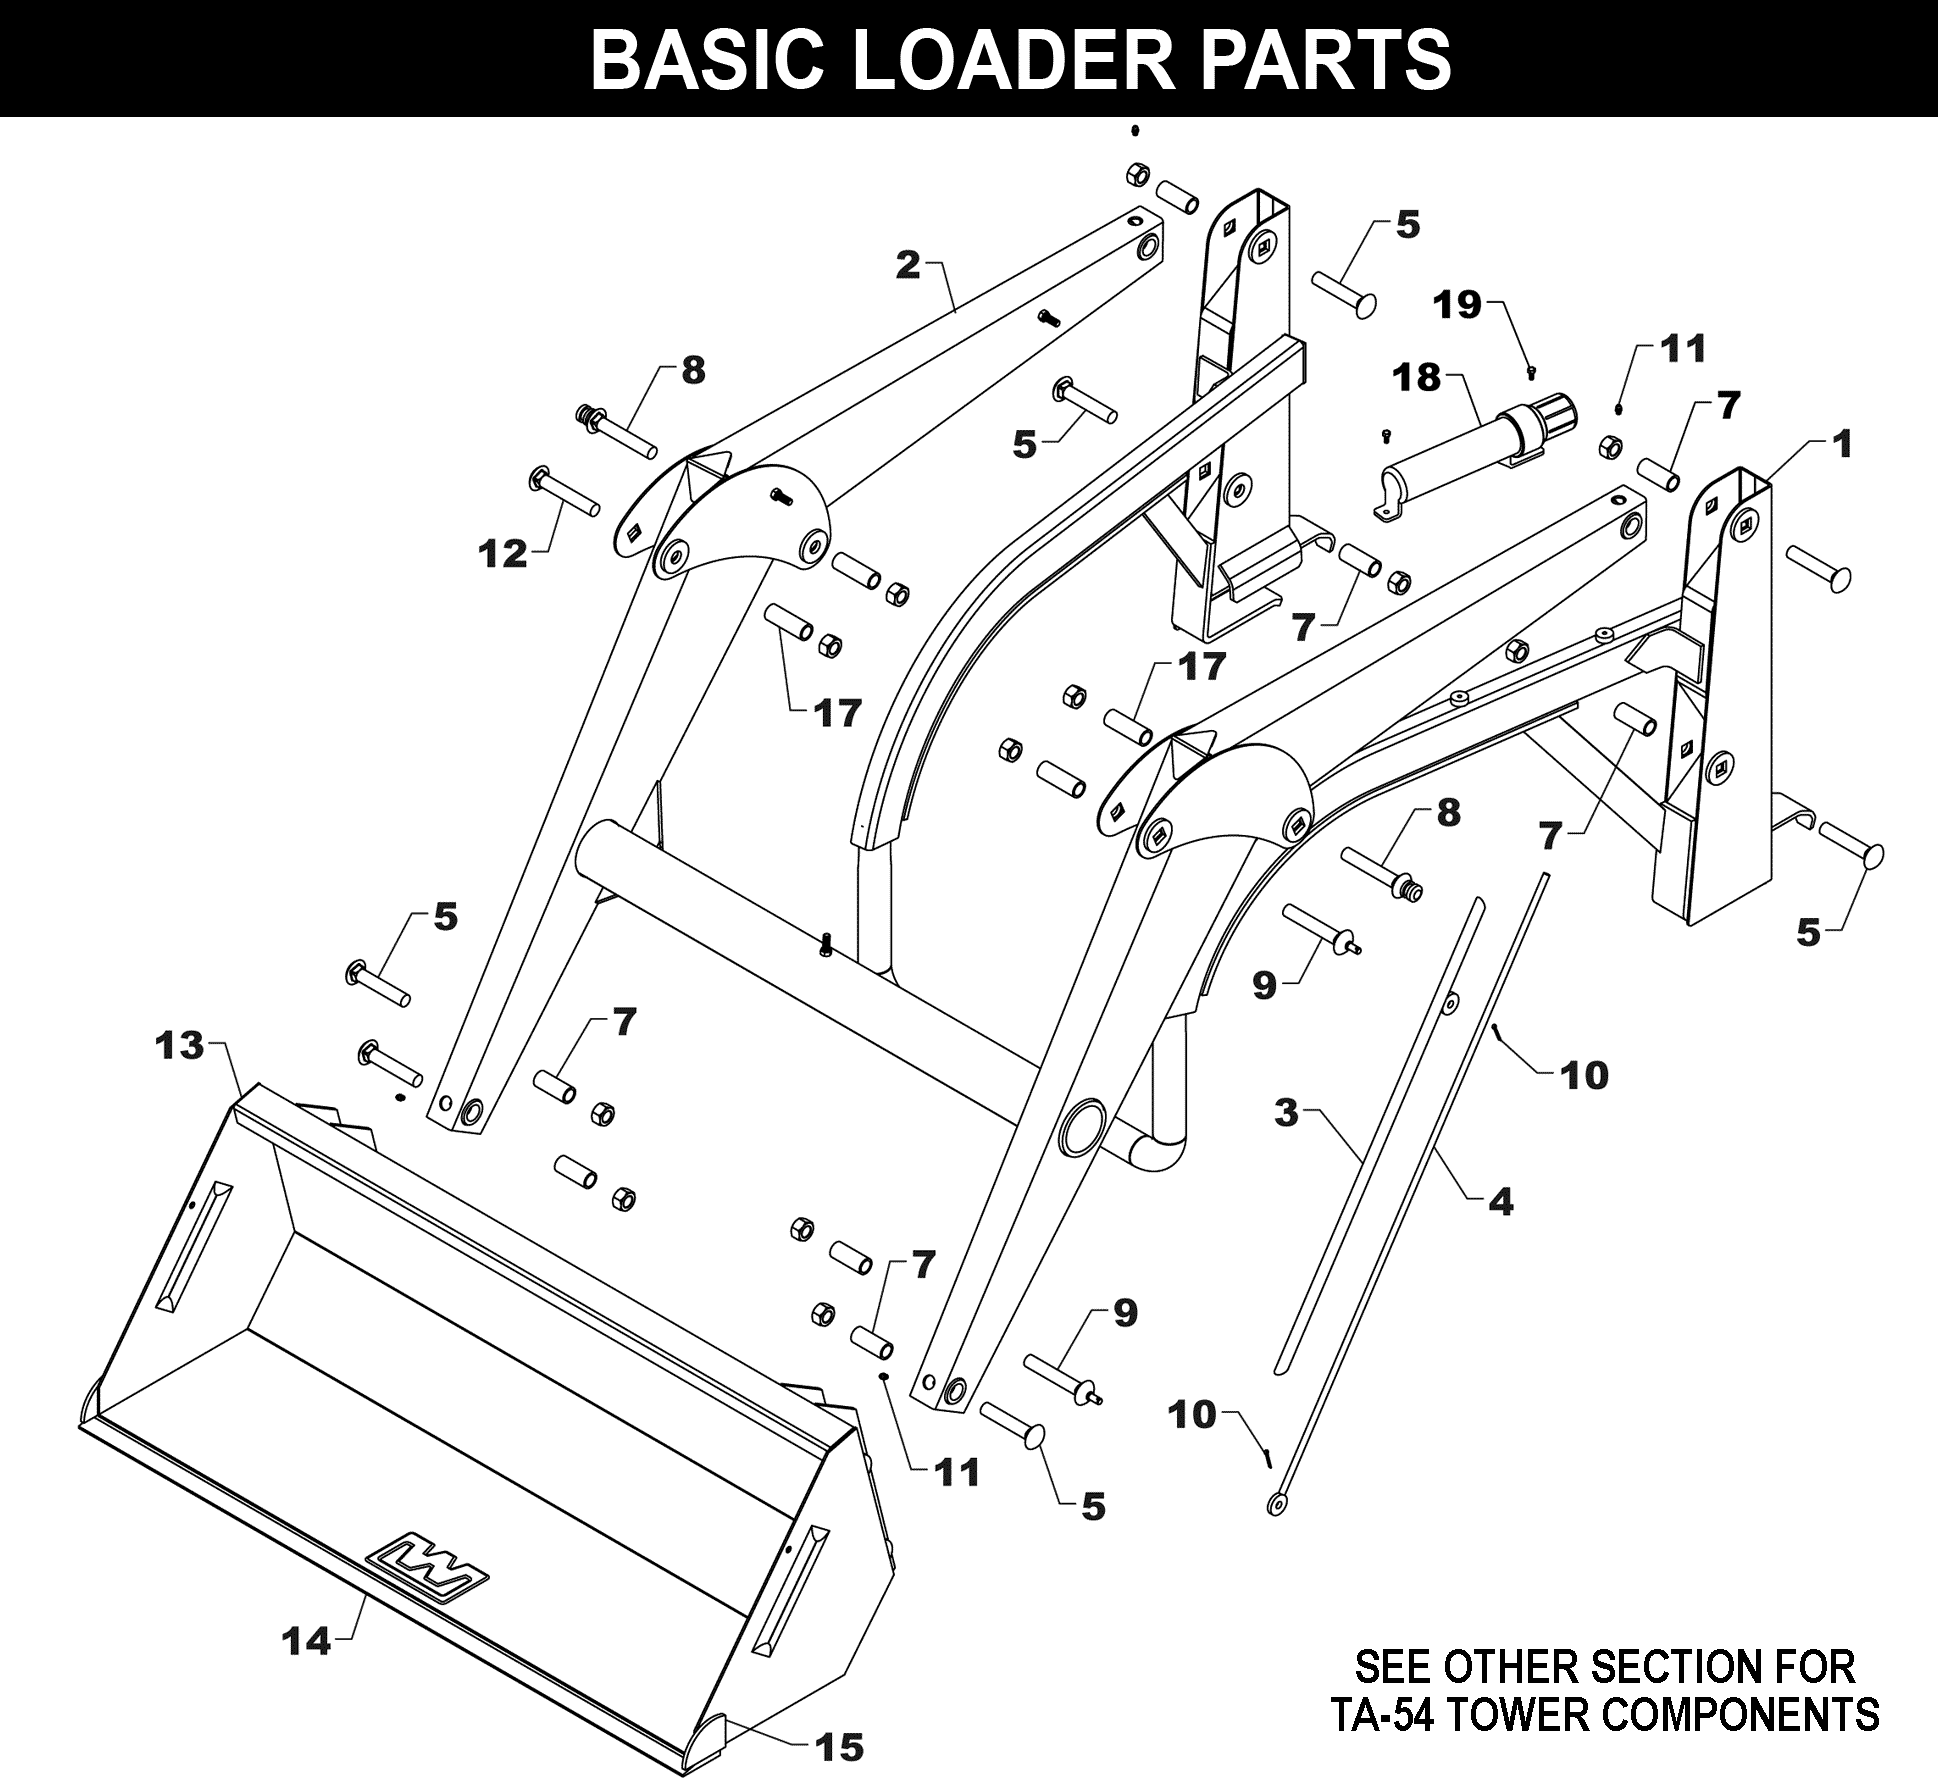 TA-54 / TA-55 Basic Loader Parts